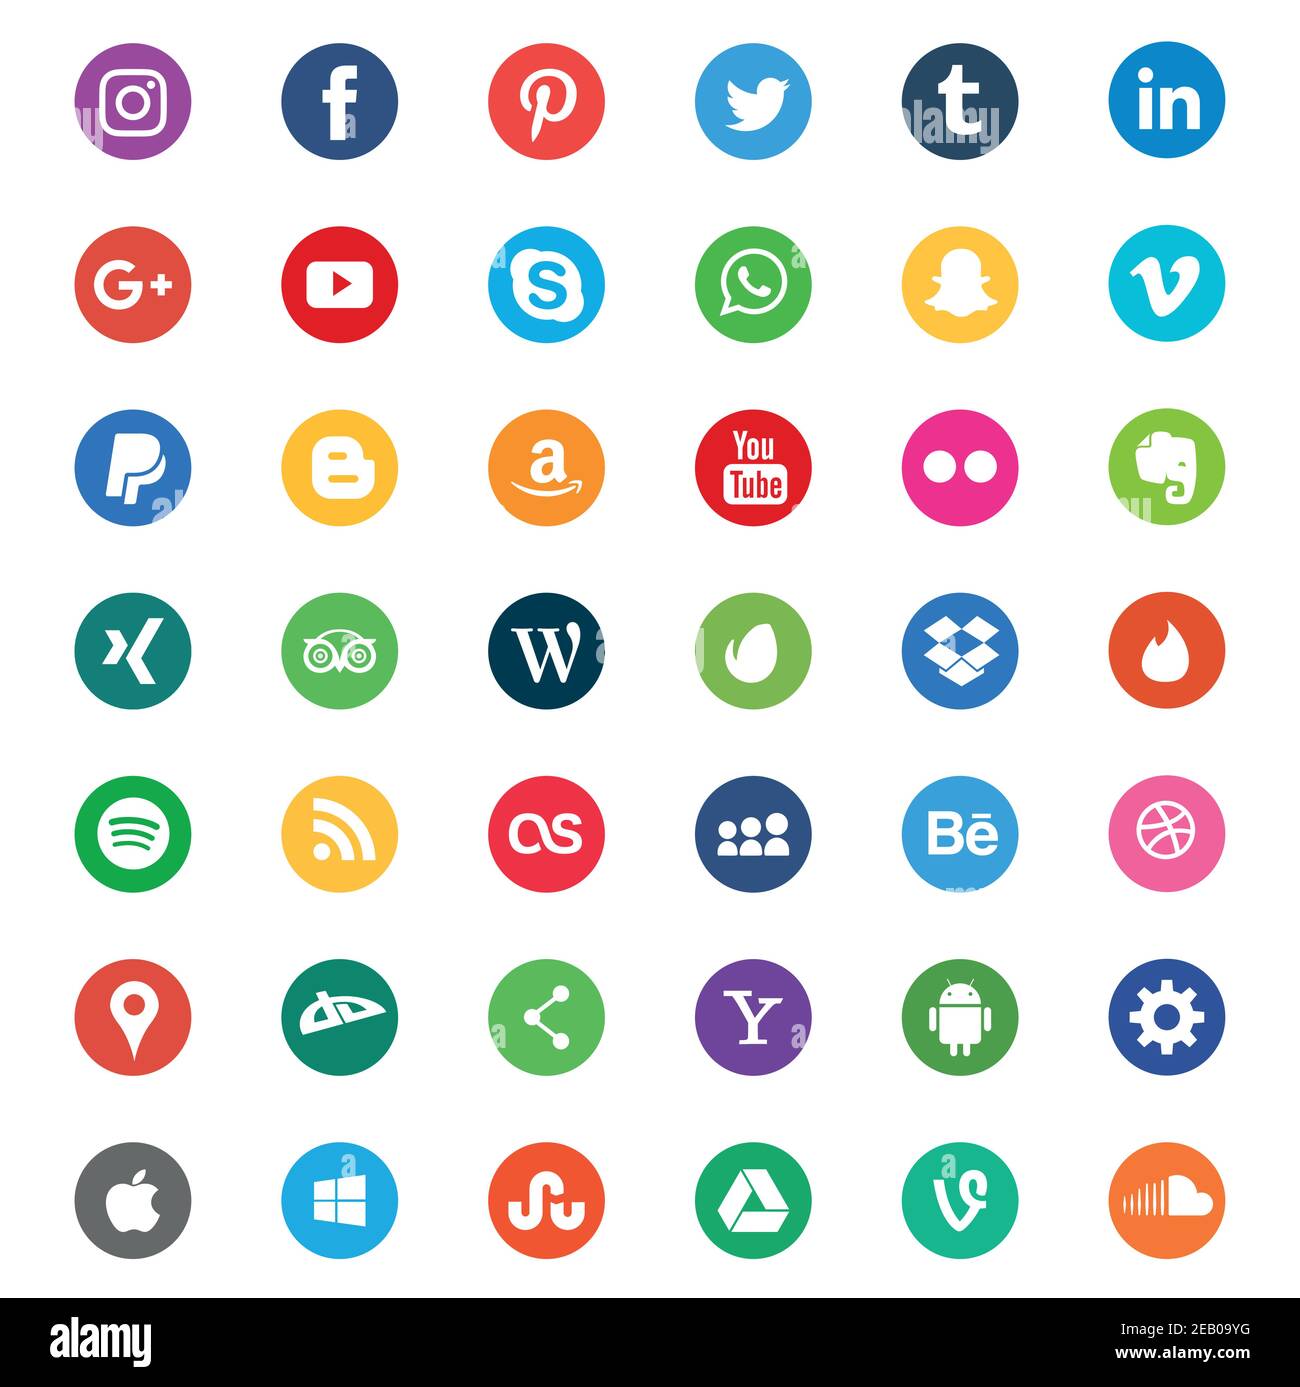 Social media apps icons set Stock Vector